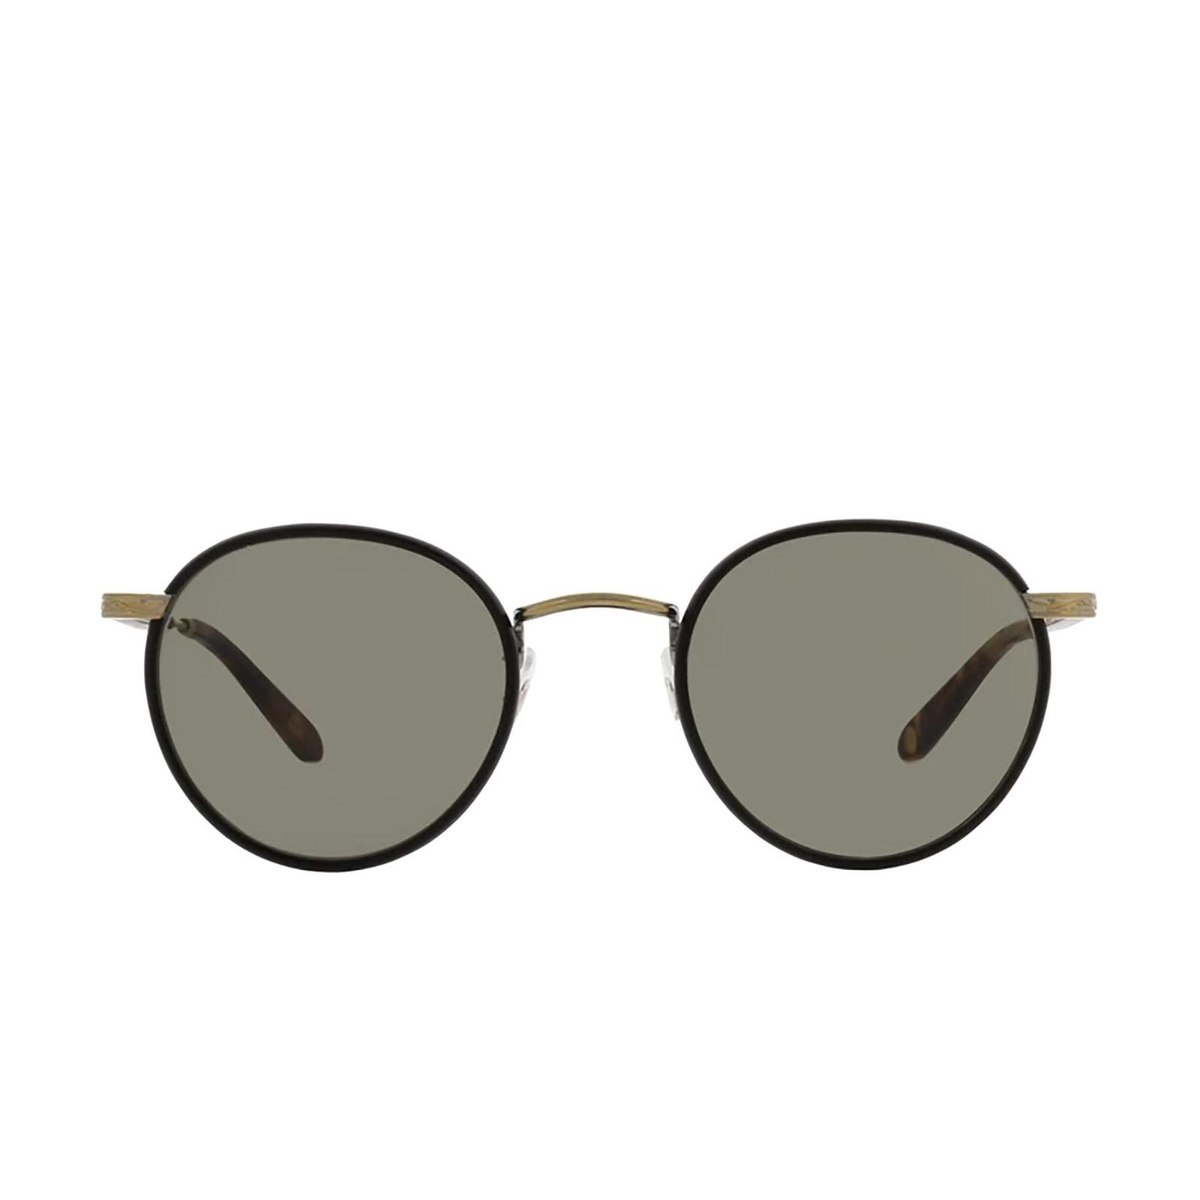 Garrett Leight WILSON Sunglasses MBK-MST/PGY Matte Black - Tortoise - front view